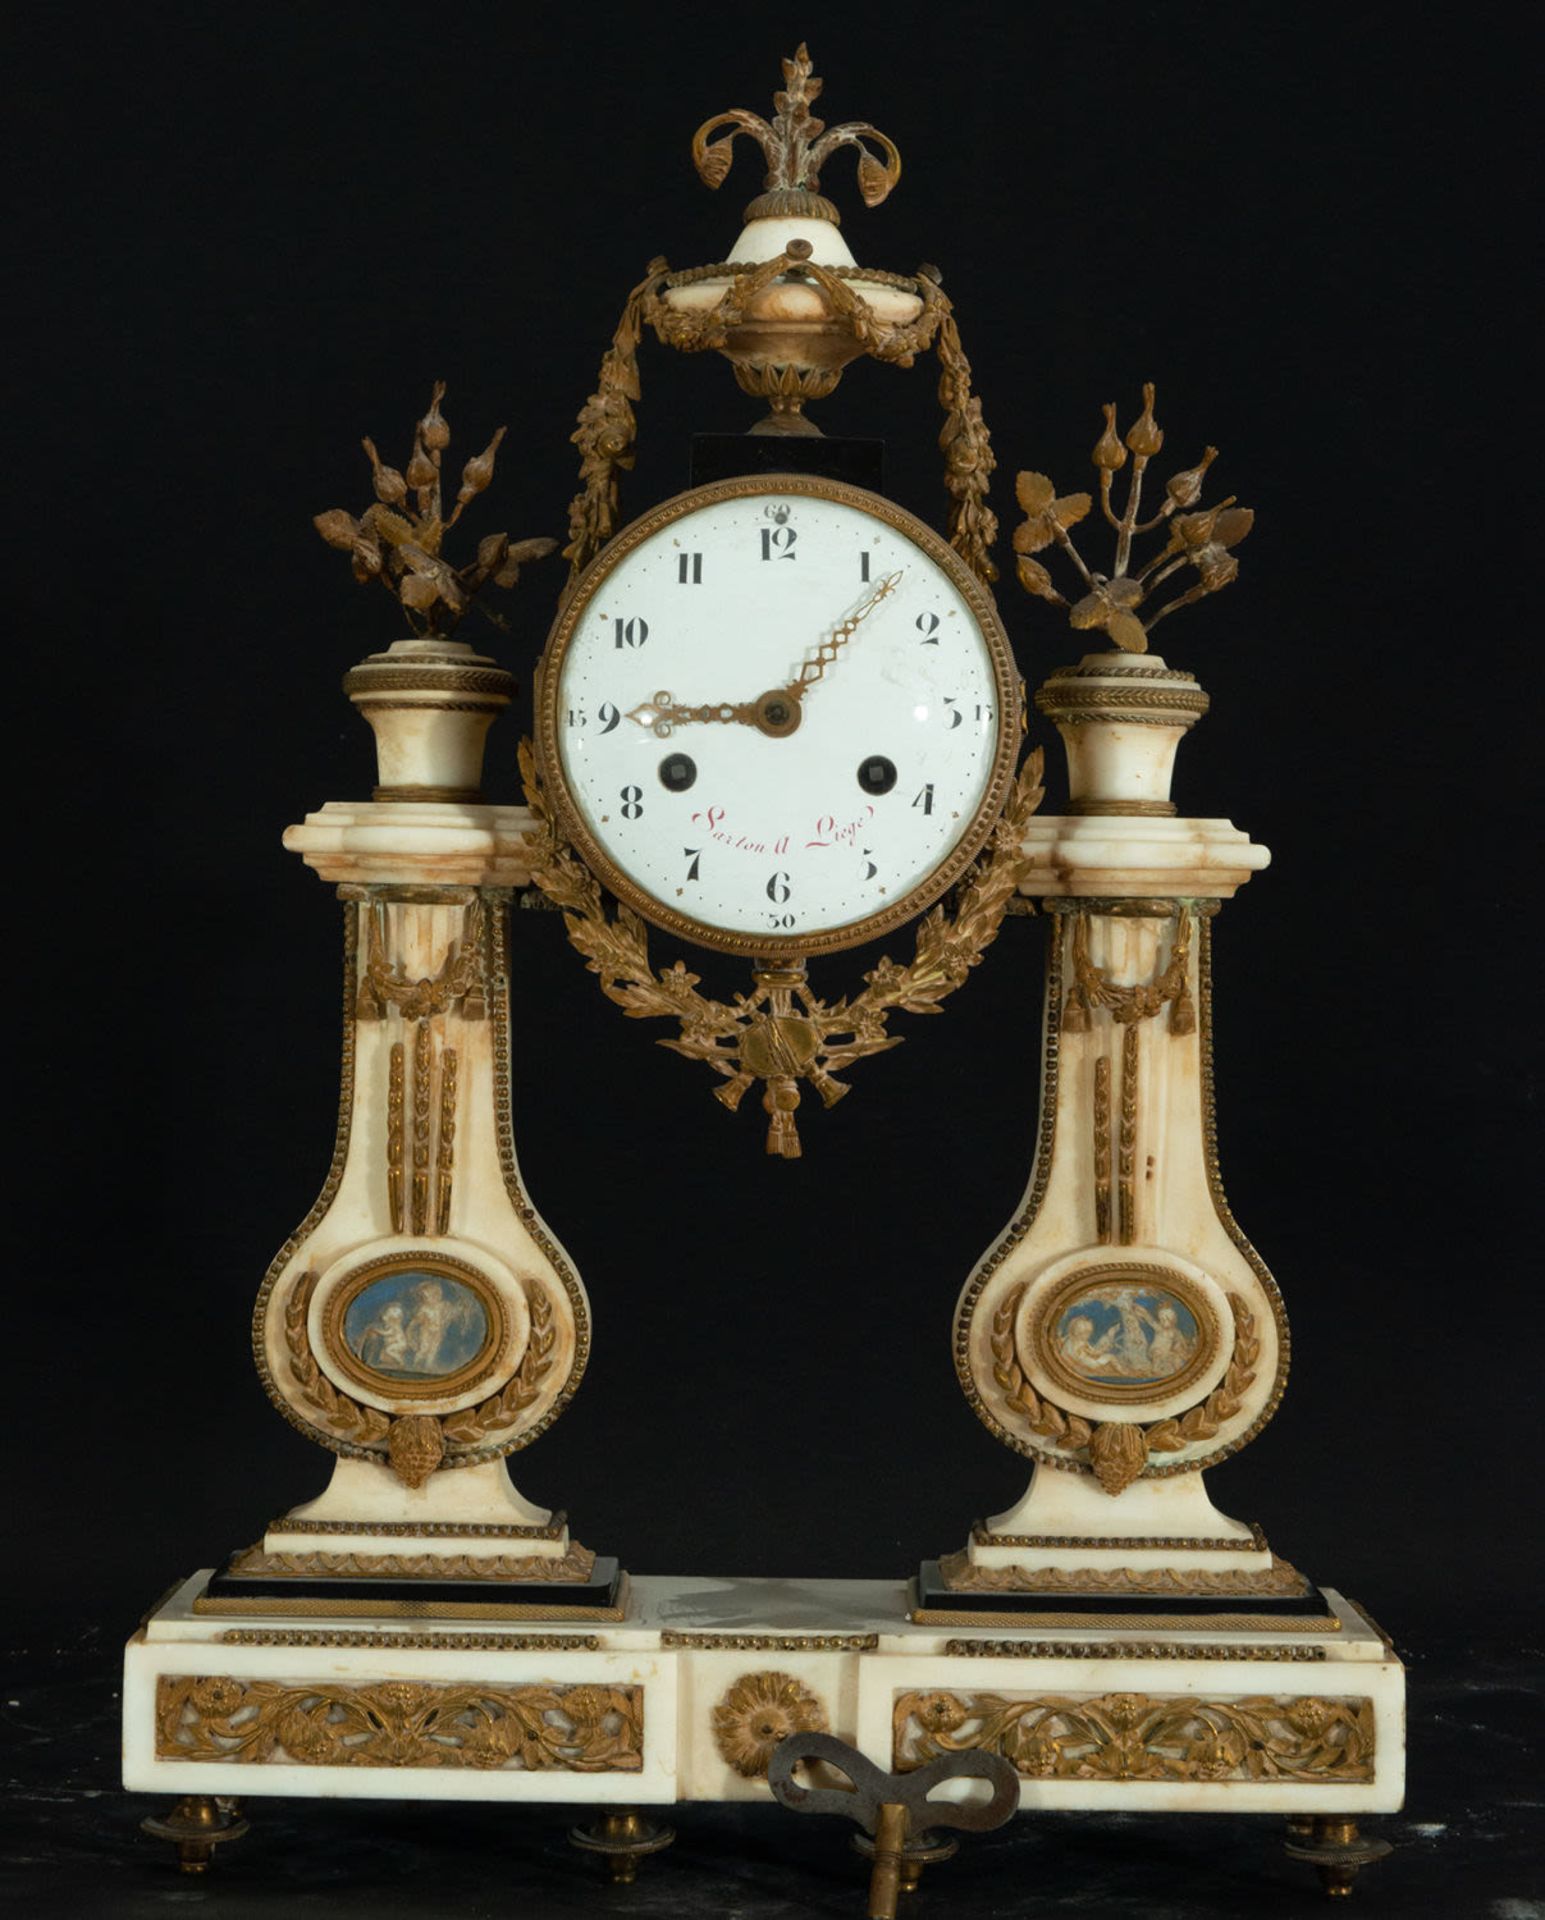 Sarlon à Liege portico clock in Alabaster and gilt bronze, France, 19th century